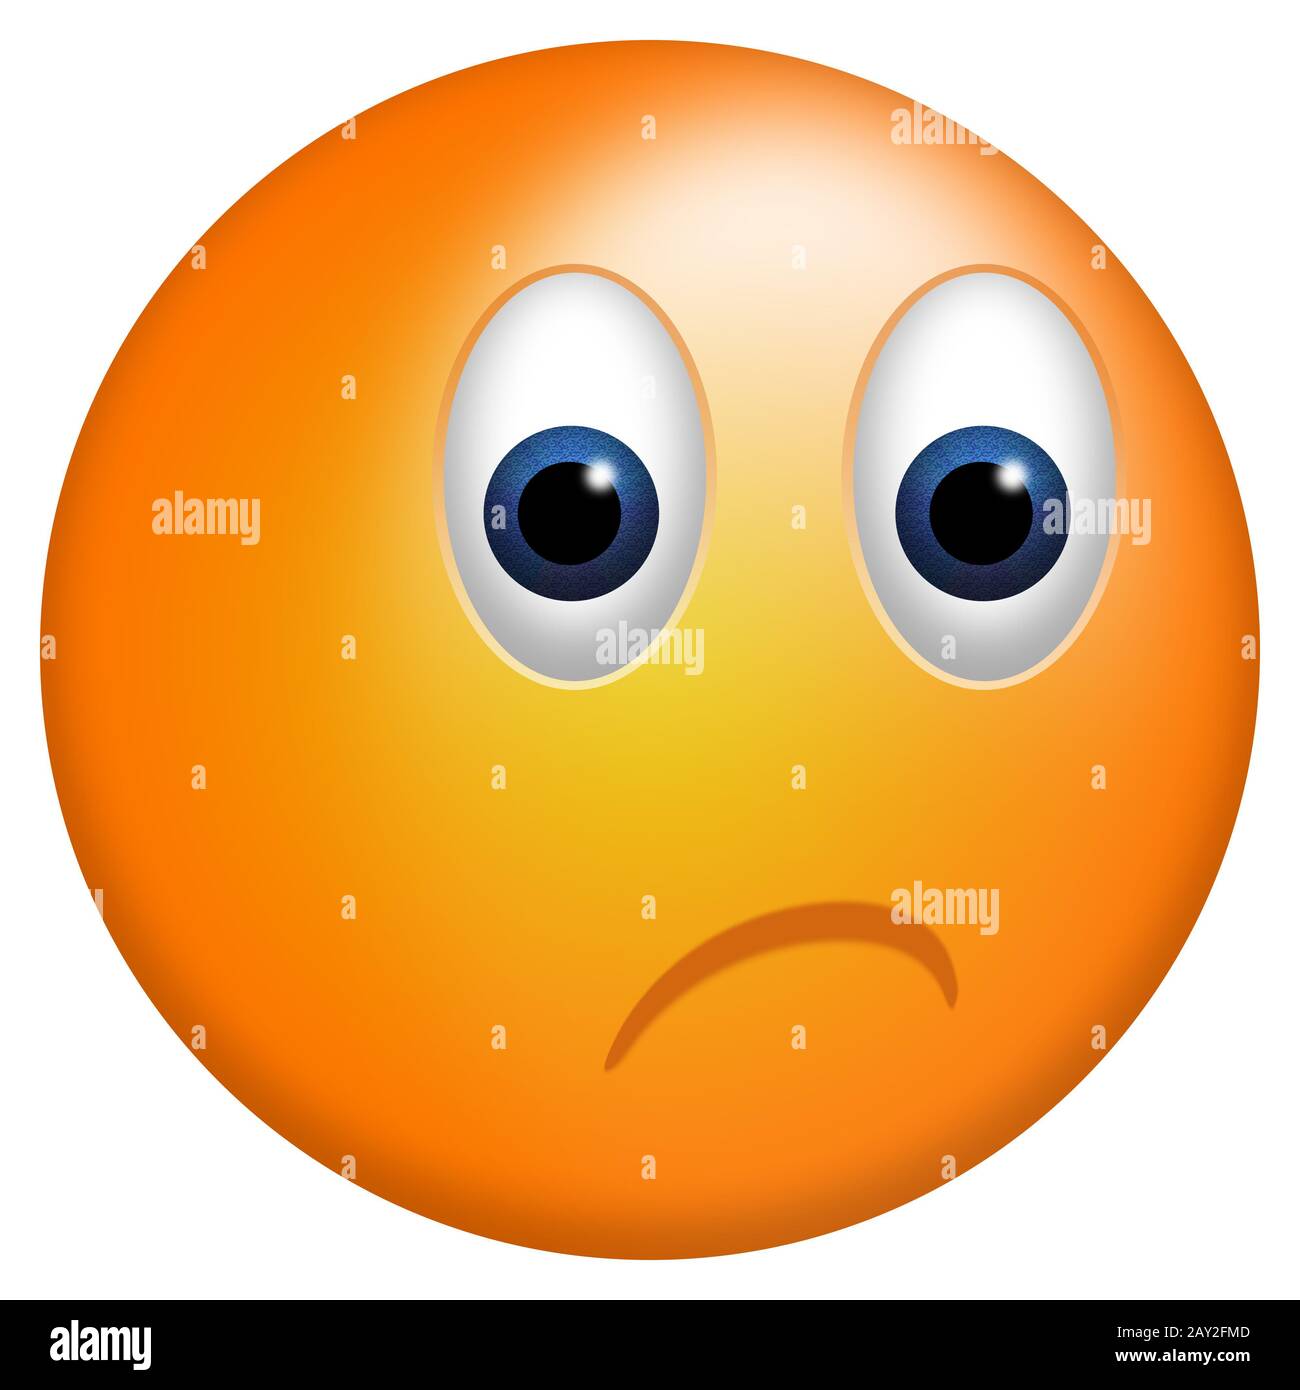 Sad emotion on a round sticker. Orange icon with sad expression. Stock Photo